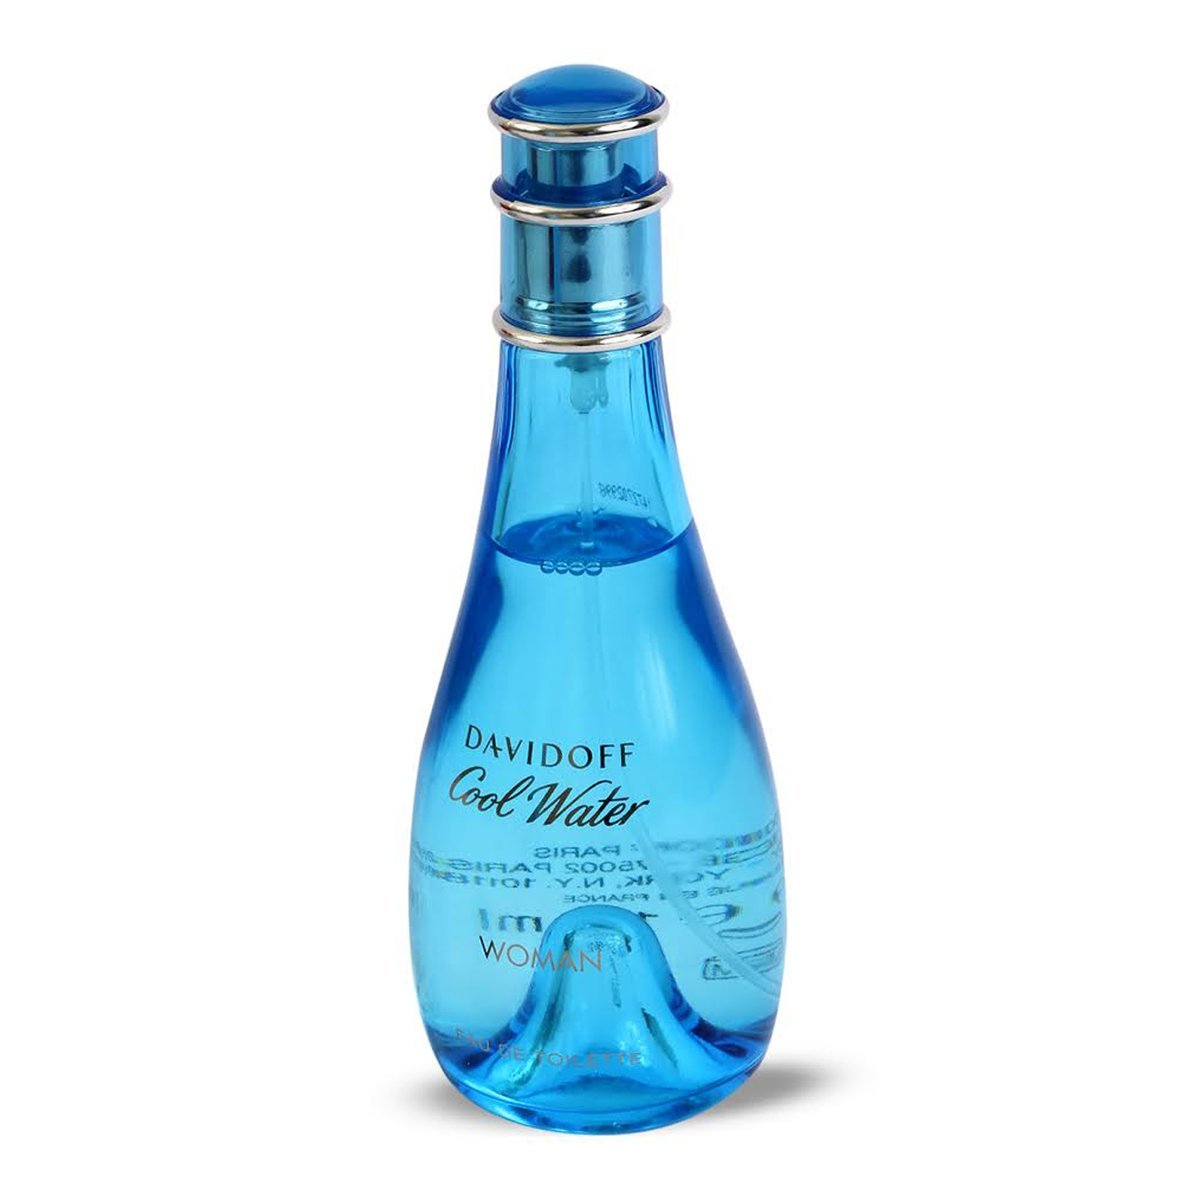 Davidoff Cool Water EDT Woman Shower & Body Lotion Set | My Perfume Shop Australia